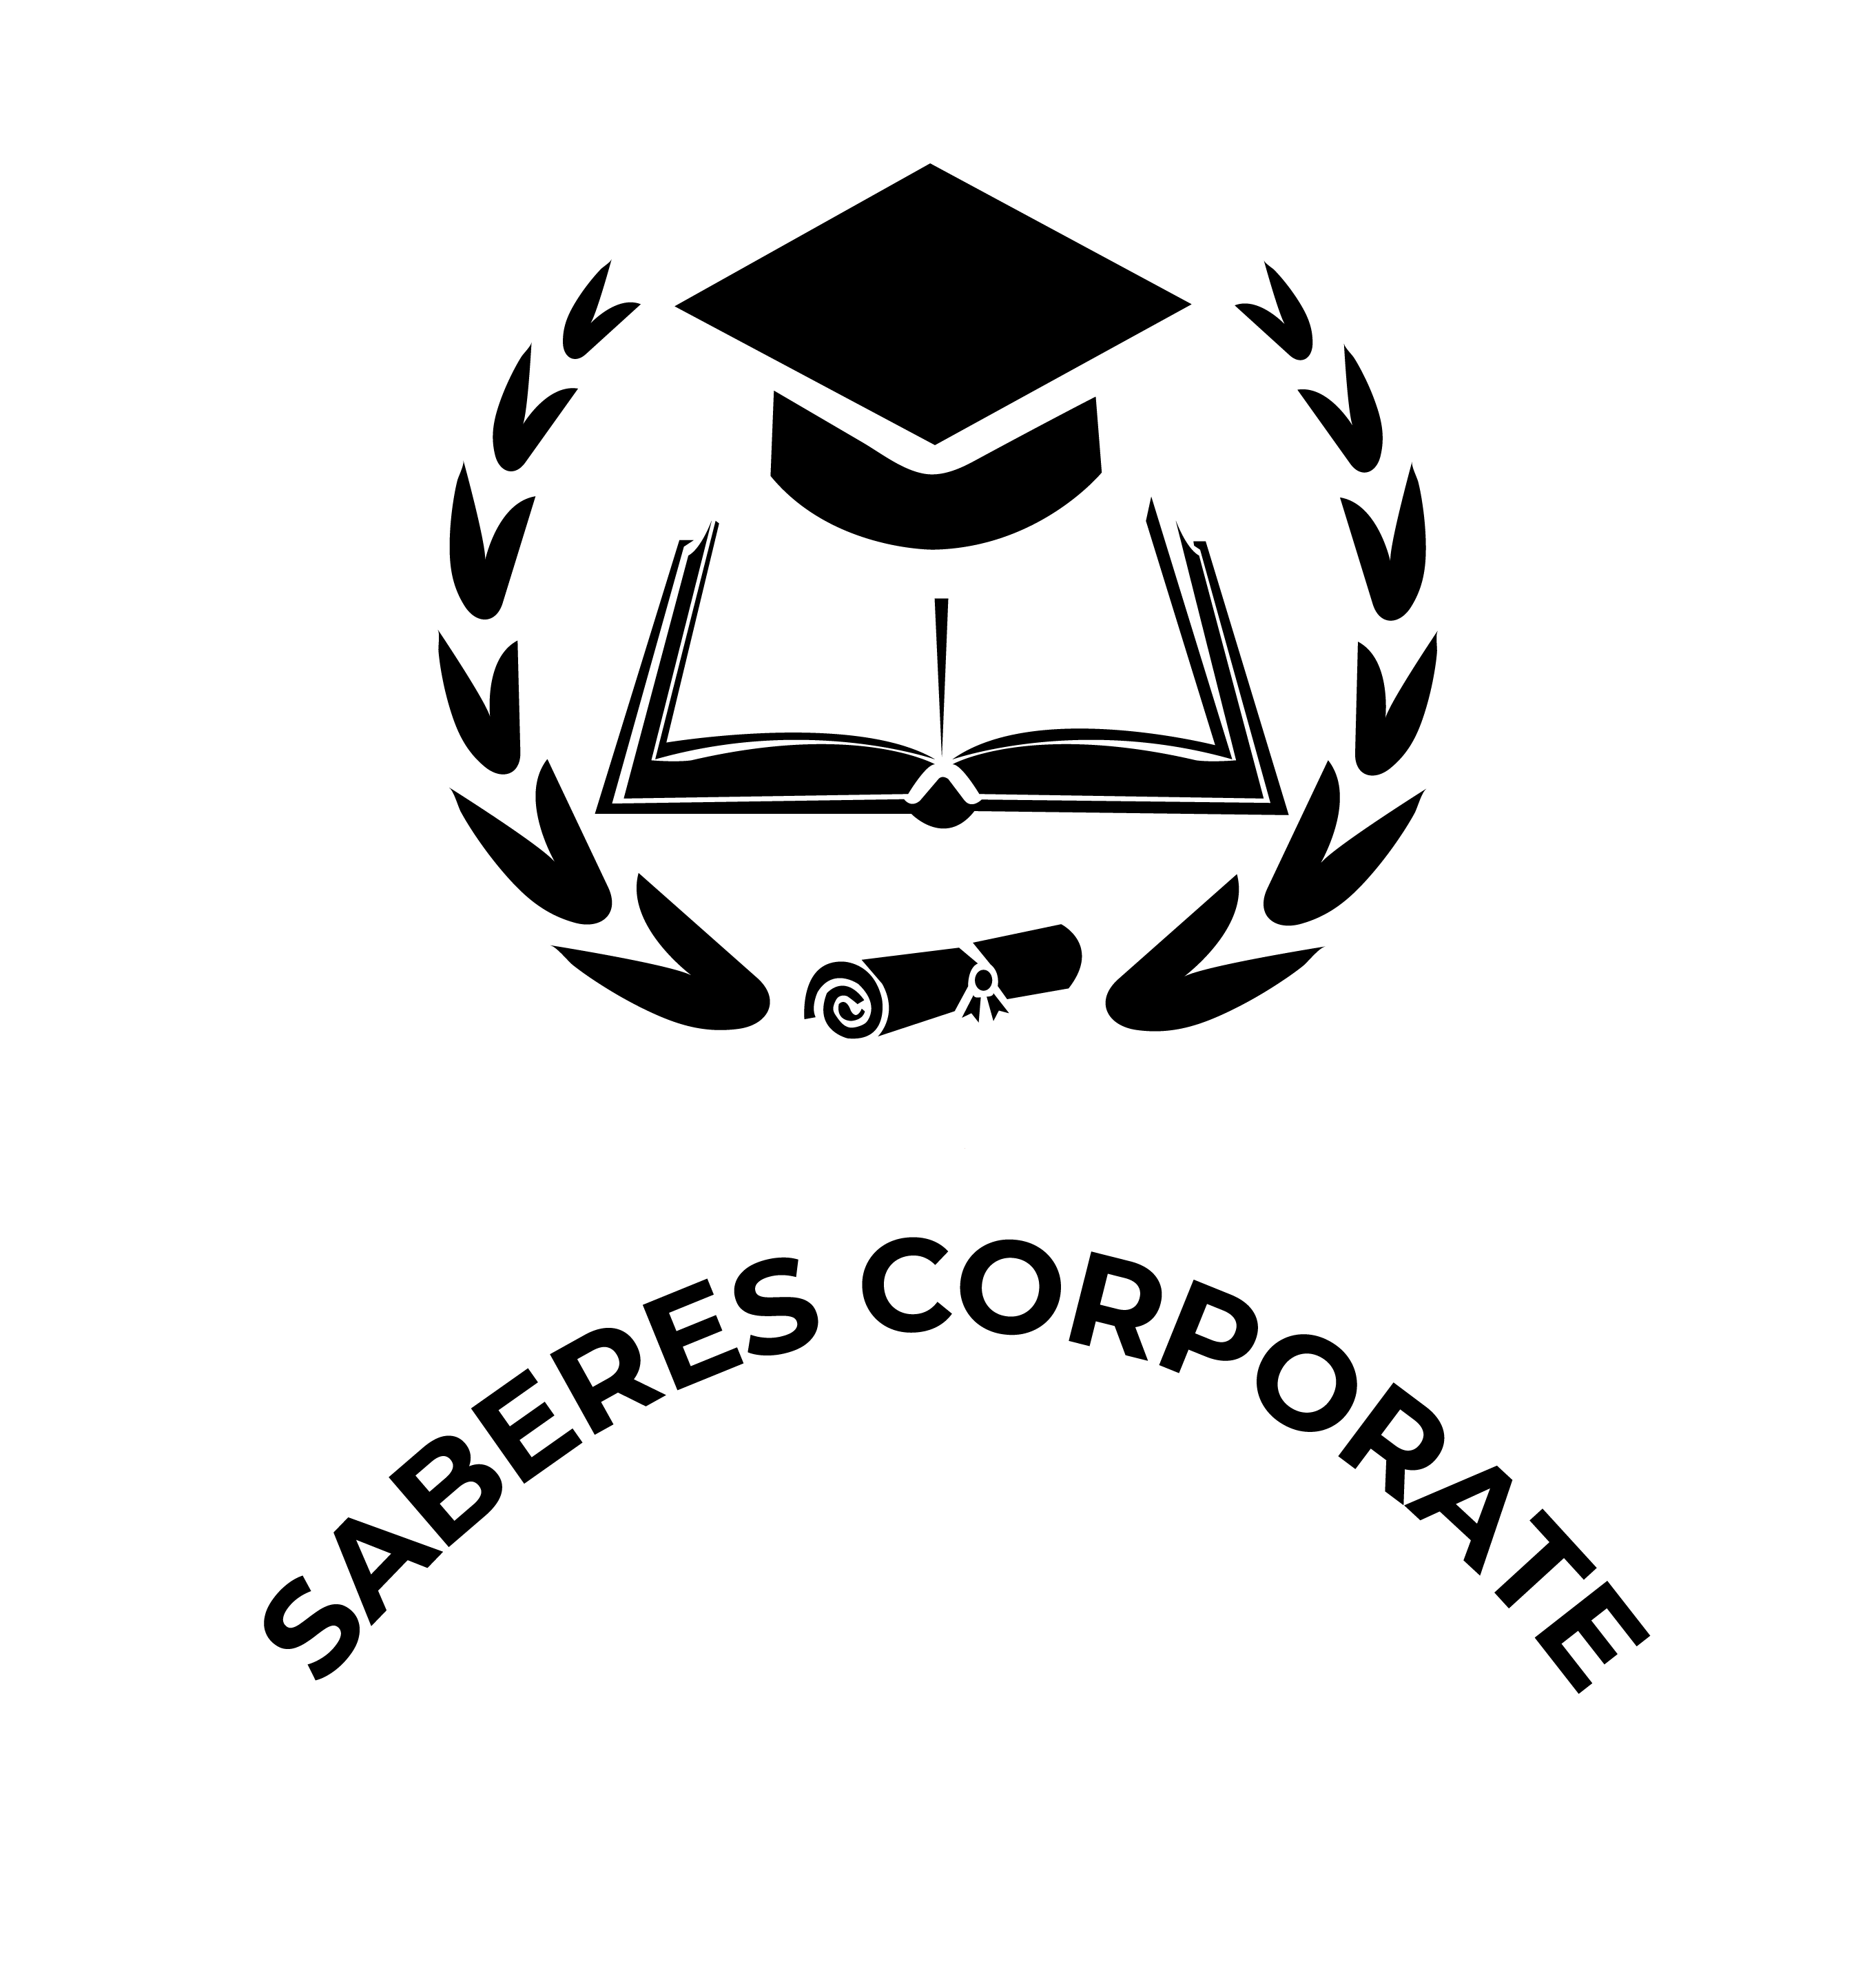 Saberes Corporate University